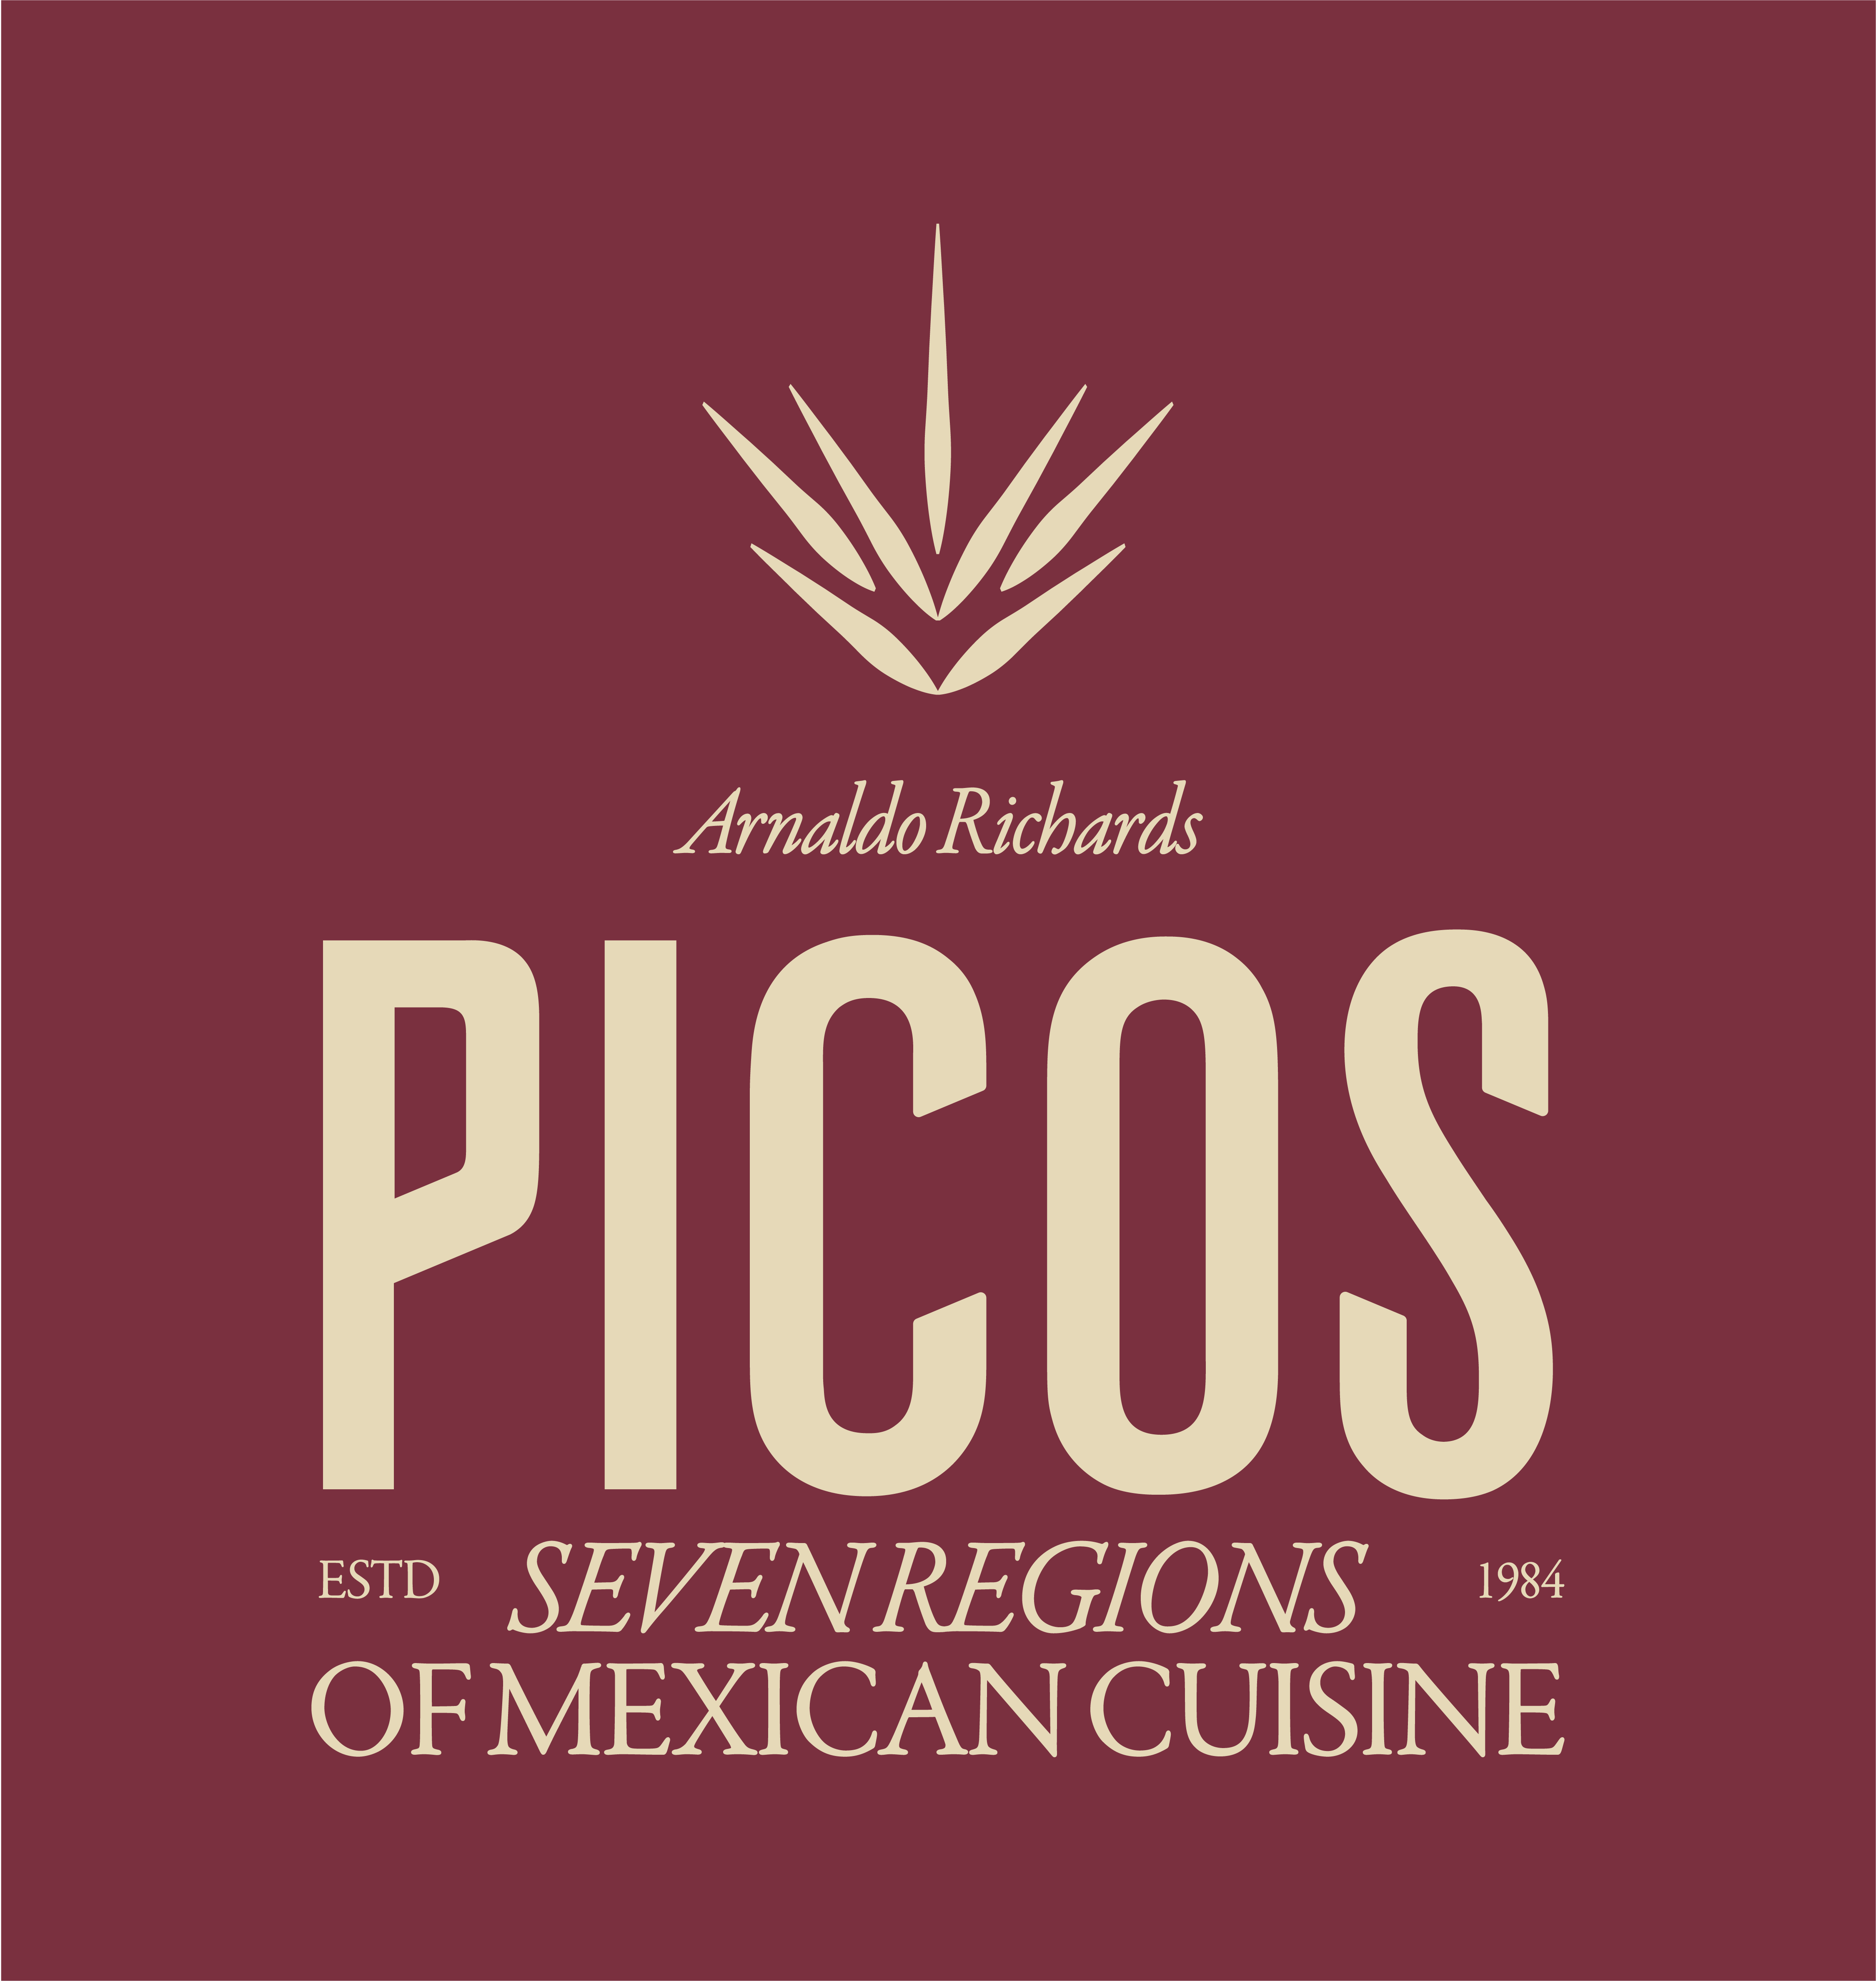 Arnaldo Richards' Picos Restaurant 3601 Kirby Dr